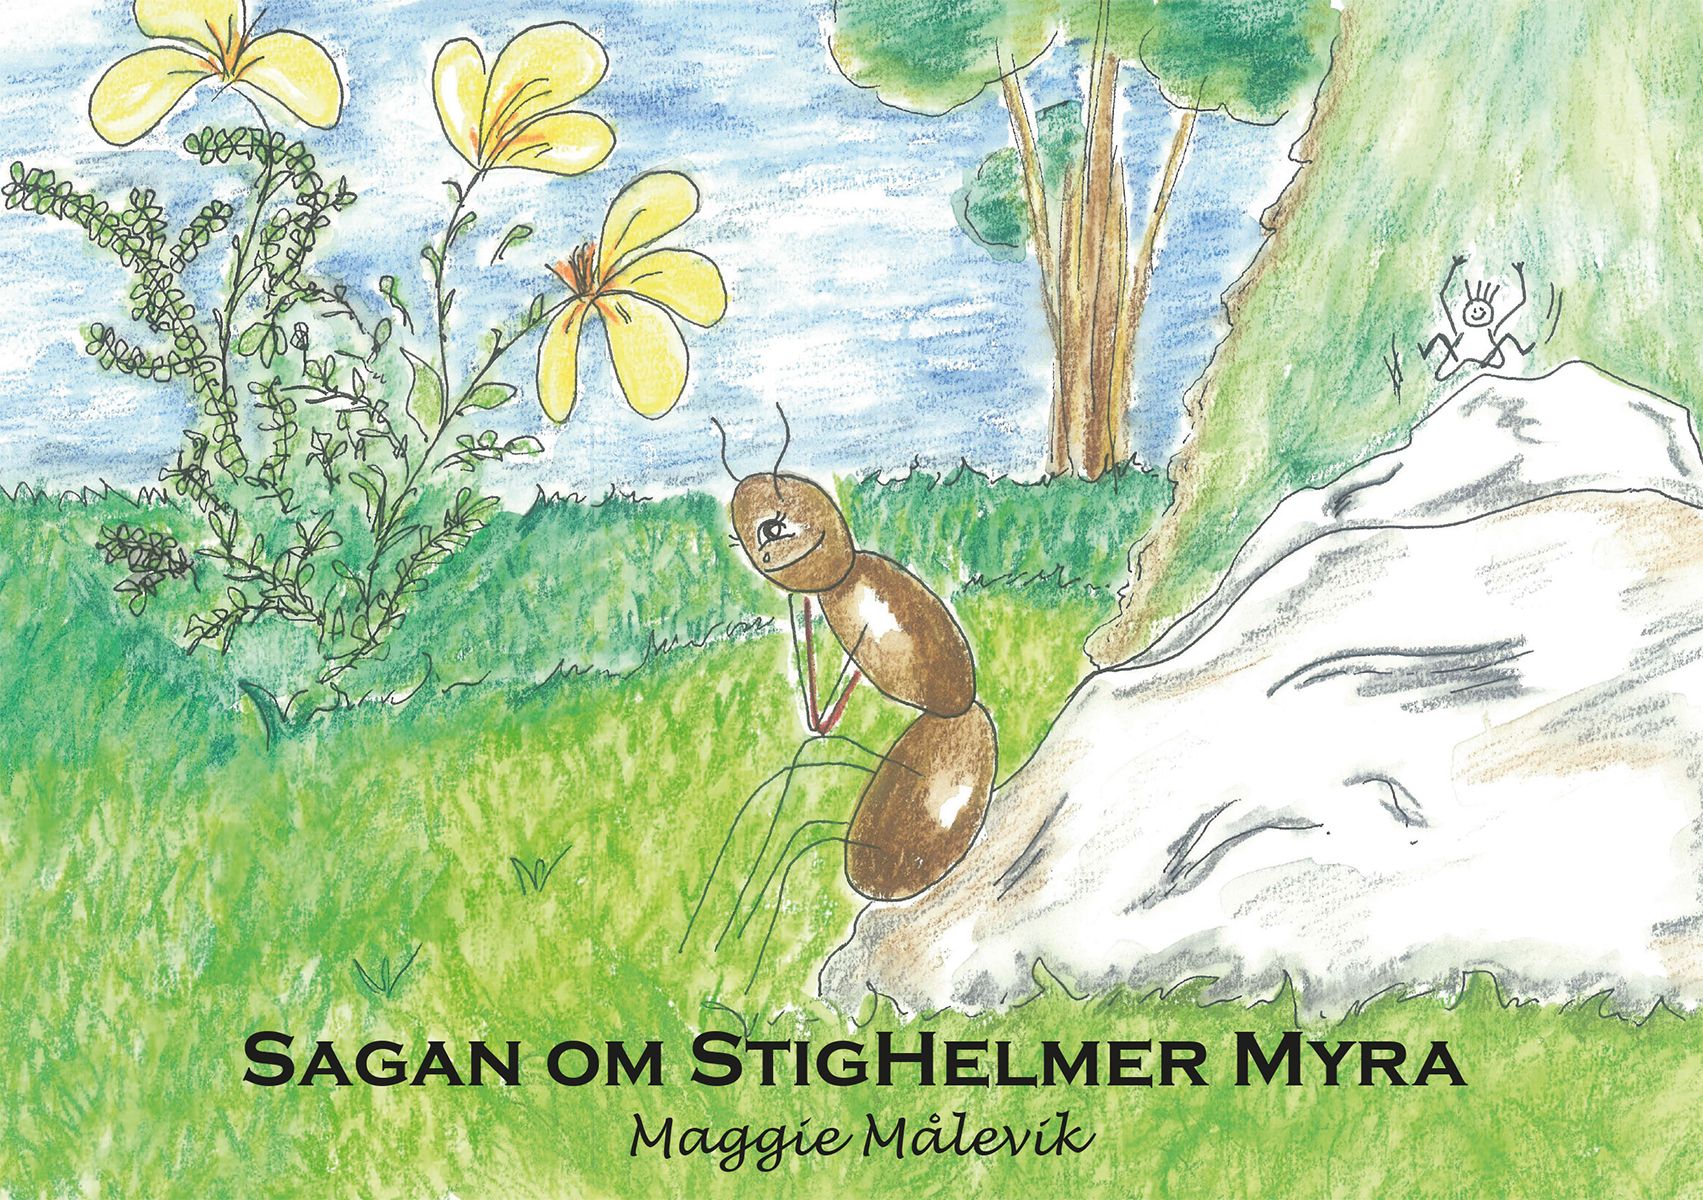 Sagan om StigHelmer Myra, e-bok av Maggie Målevik